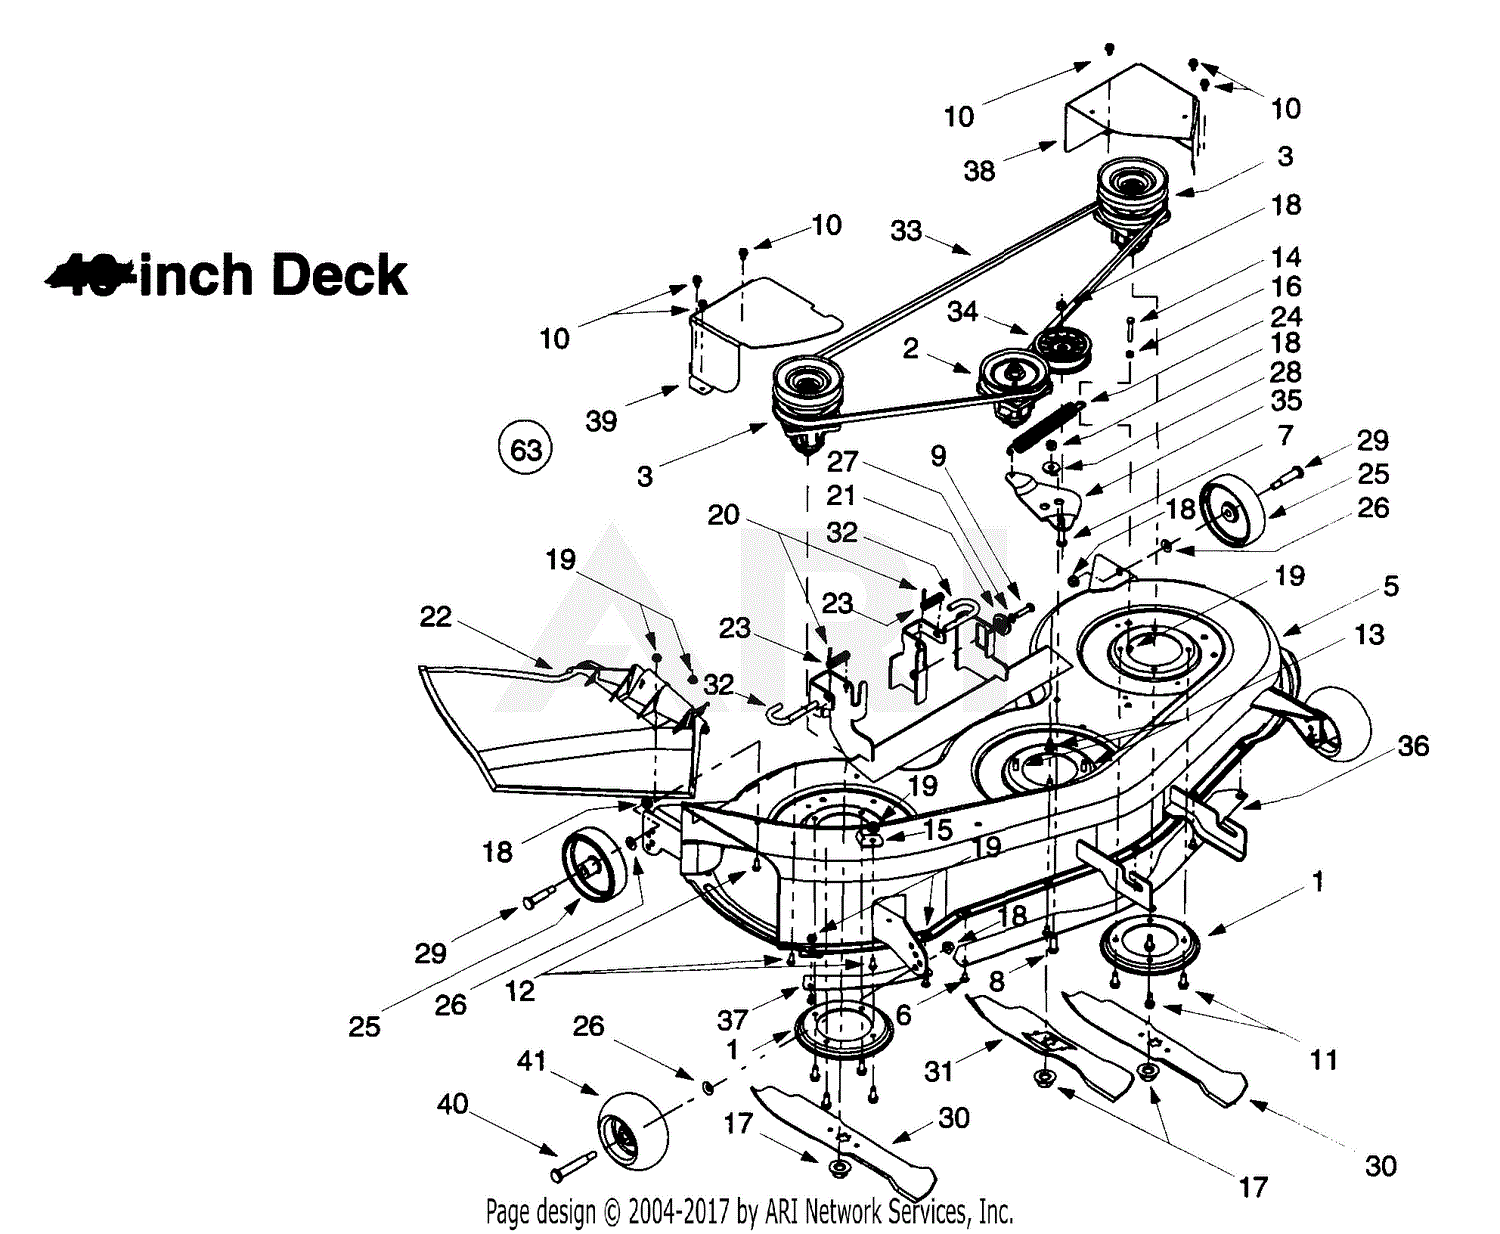 30 Huskee 46 Inch Deck Belt Diagram